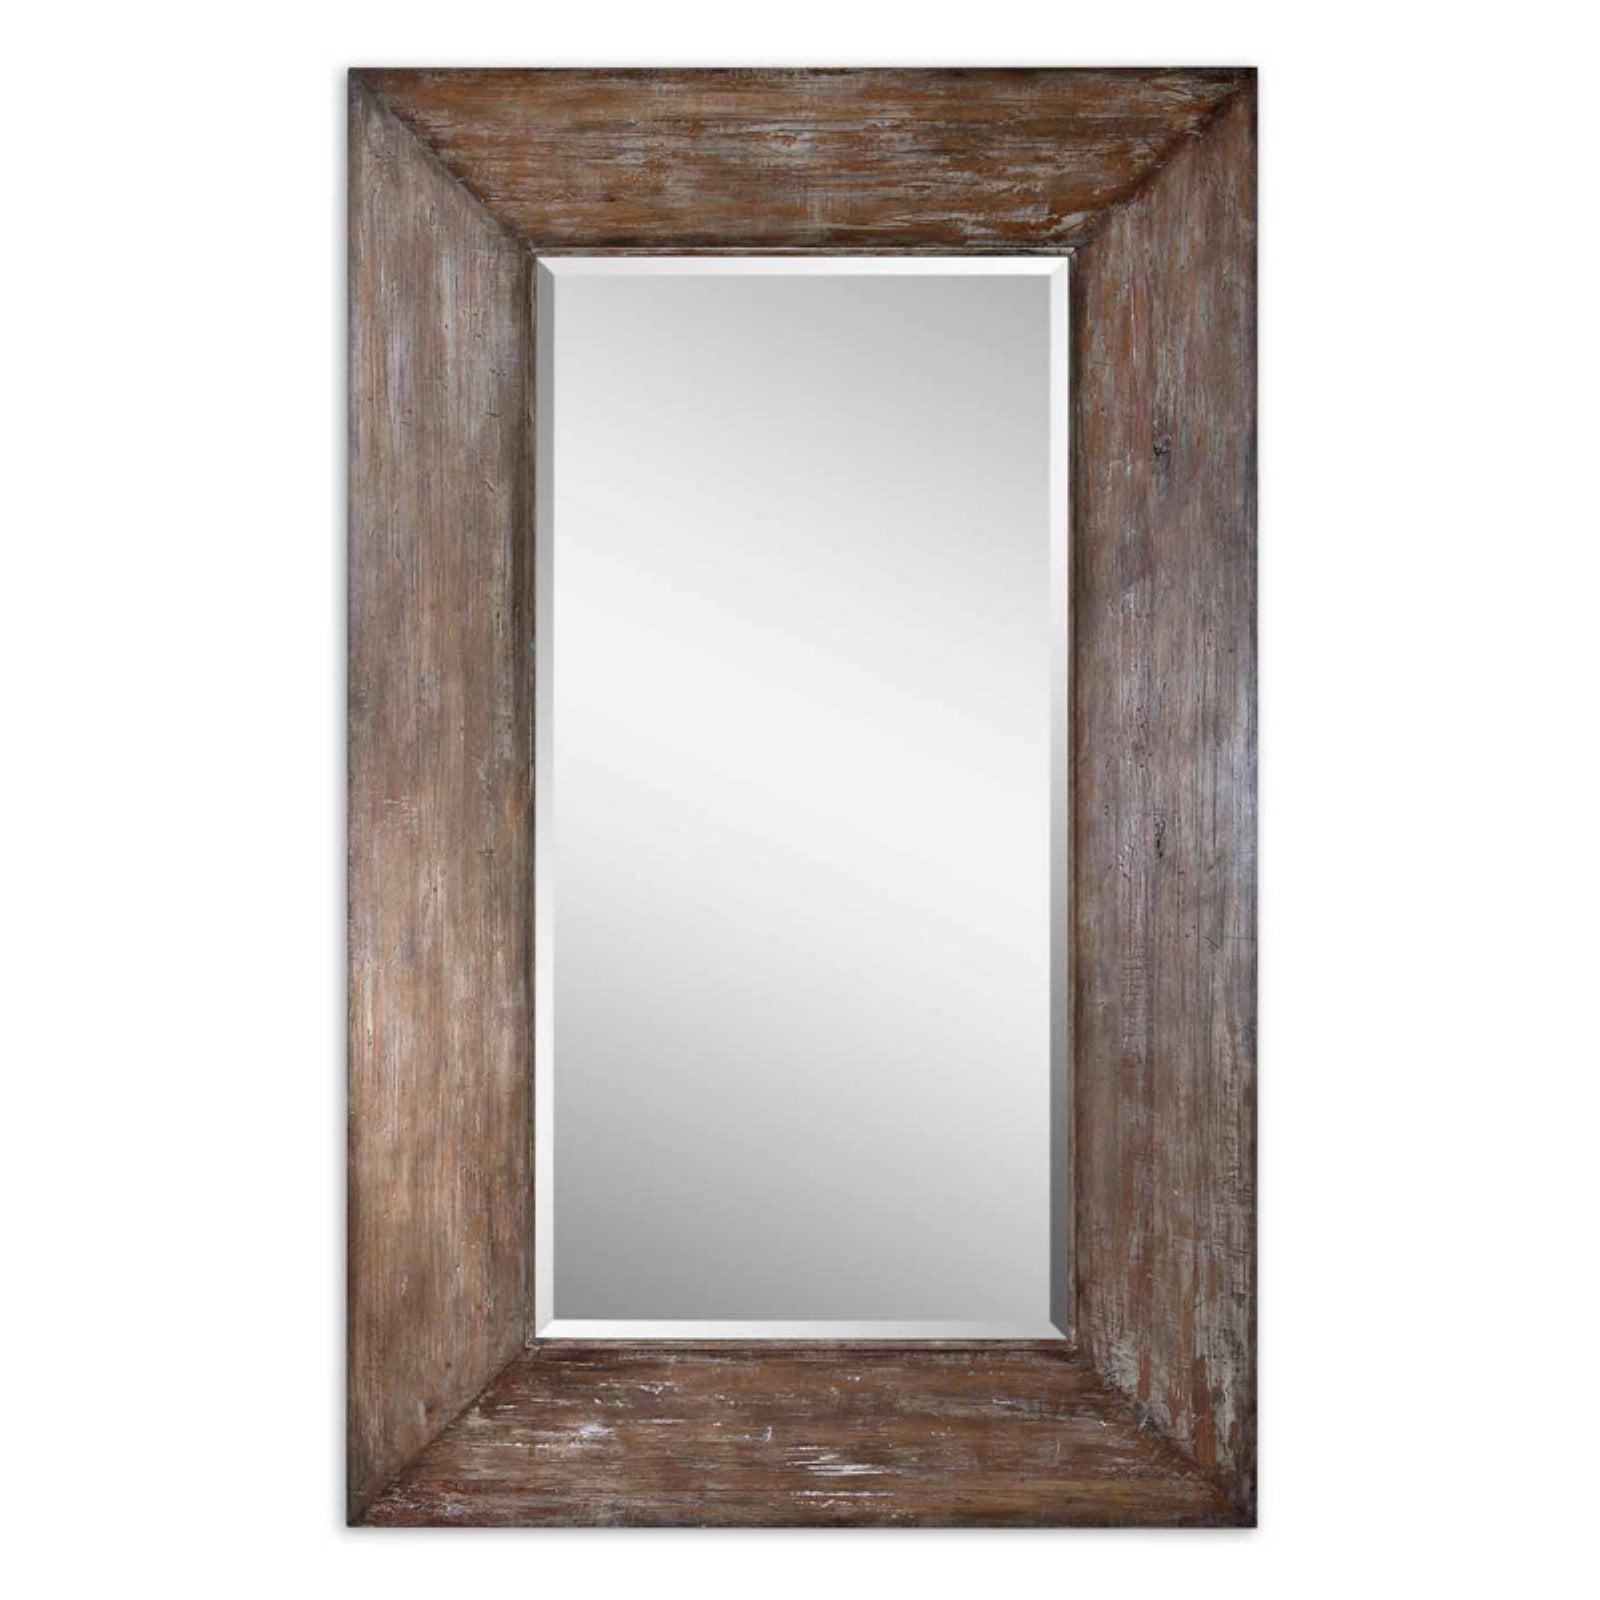 Langford Full-Length Rectangular Wood Mirror in Gray/Brown